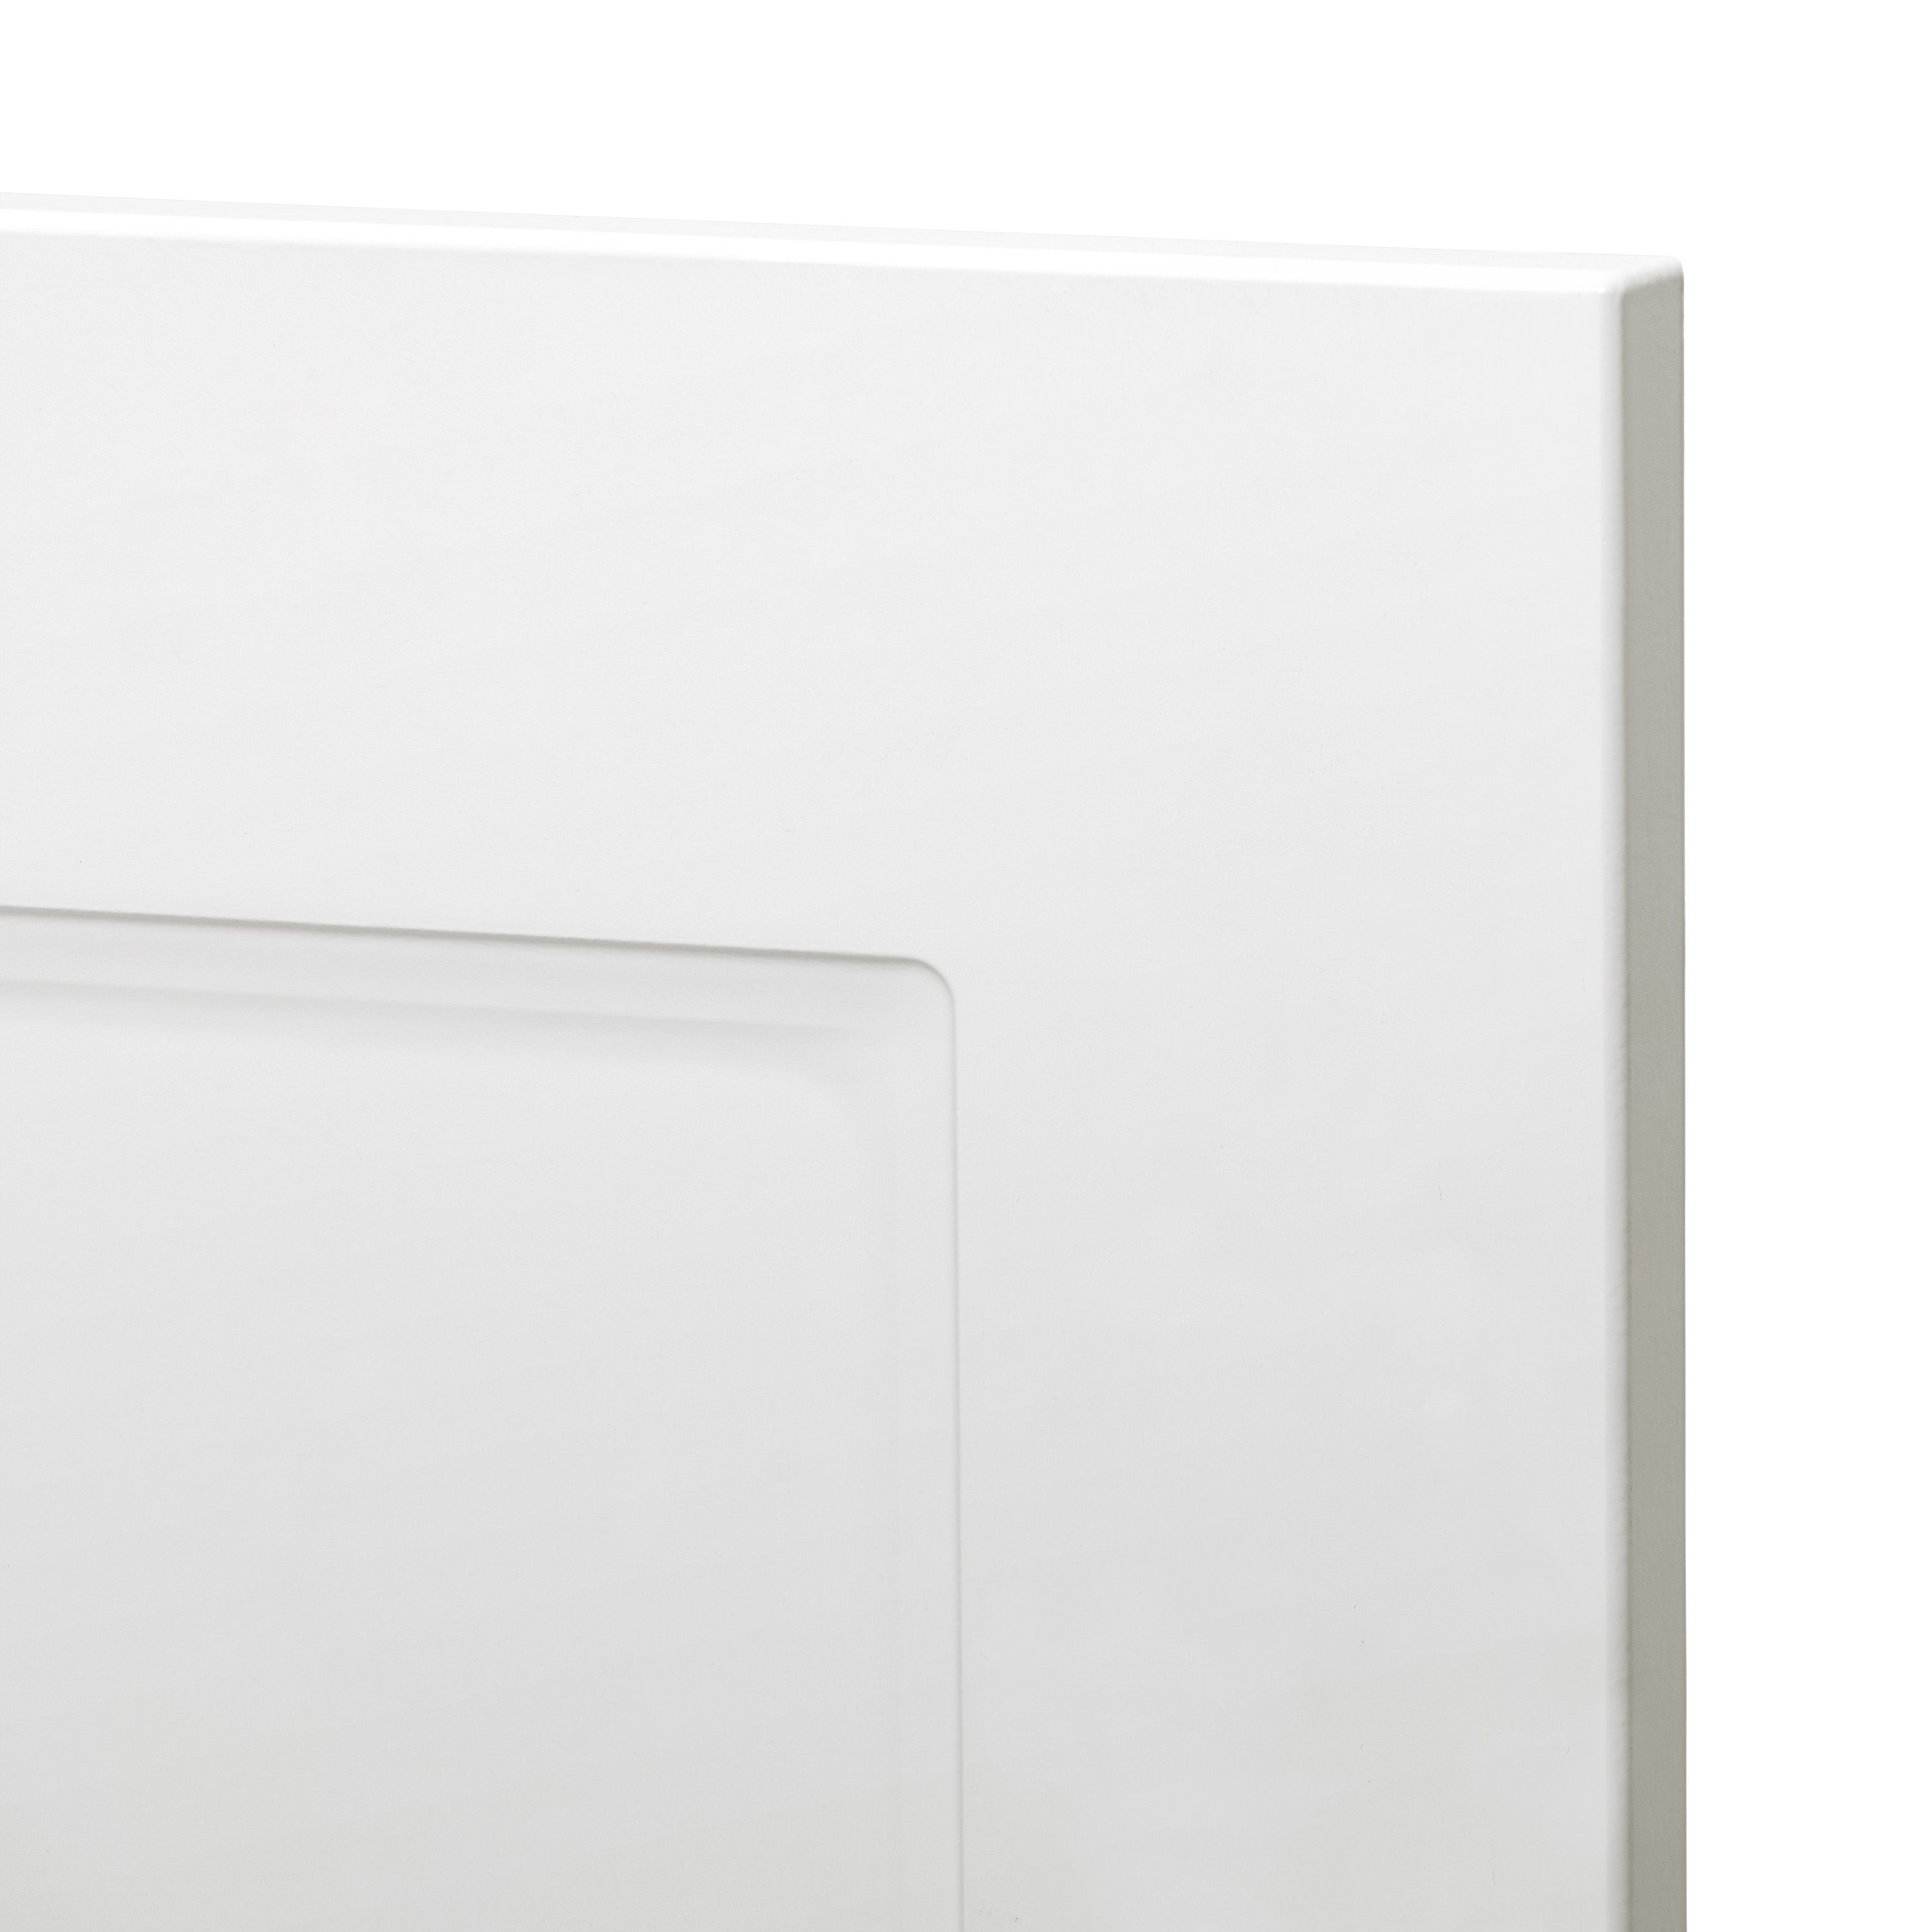 GoodHome Artemisia Matt white classic shaker Highline Cabinet door (W)250mm (H)715mm (T)18mm